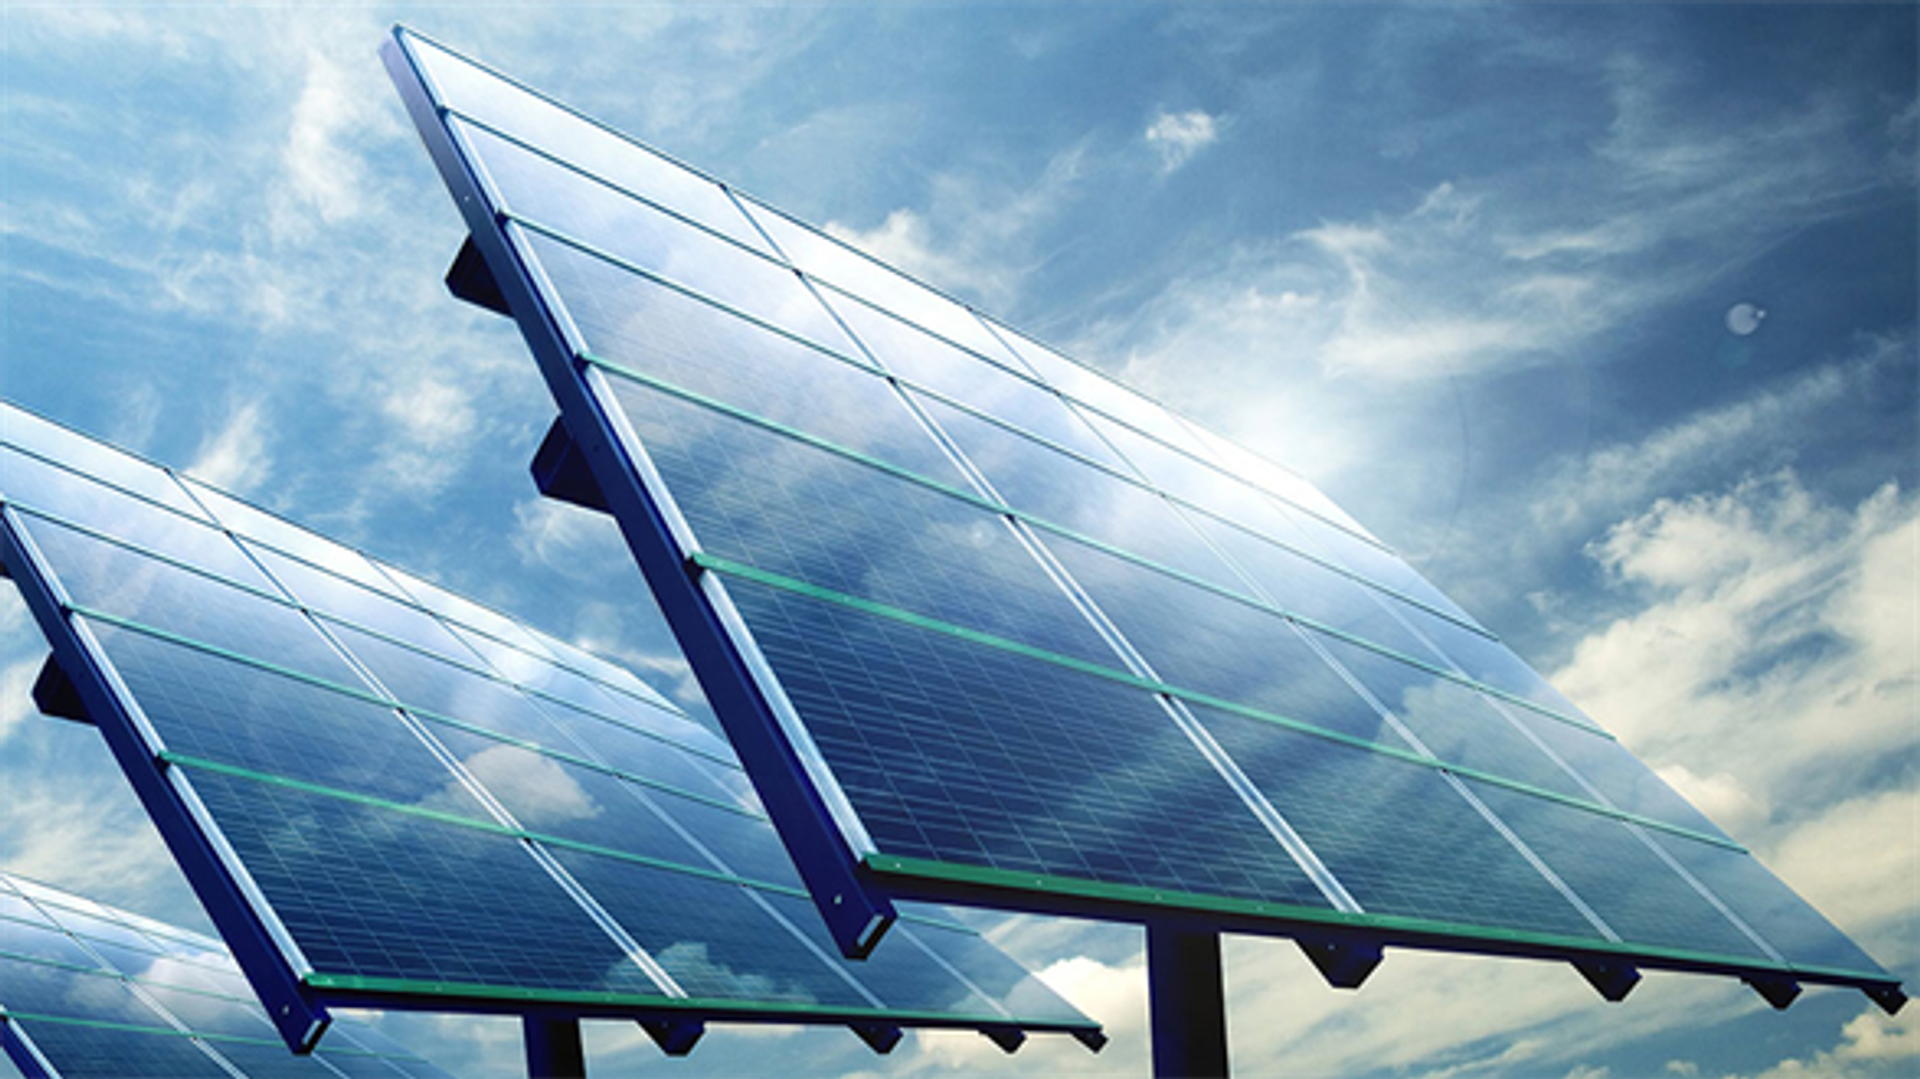 Vibrant Solar Solutions Ltd